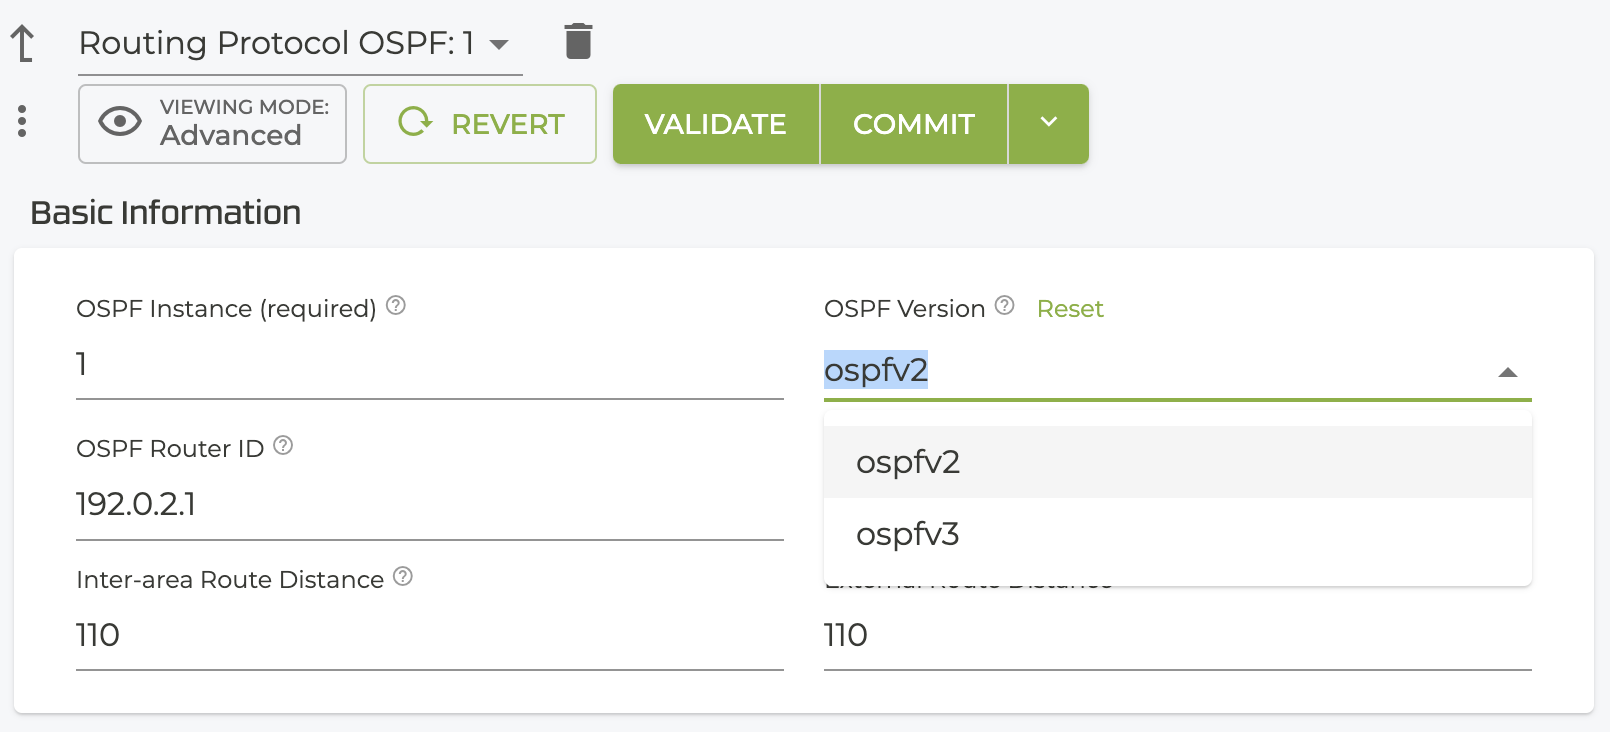 OSPF Version